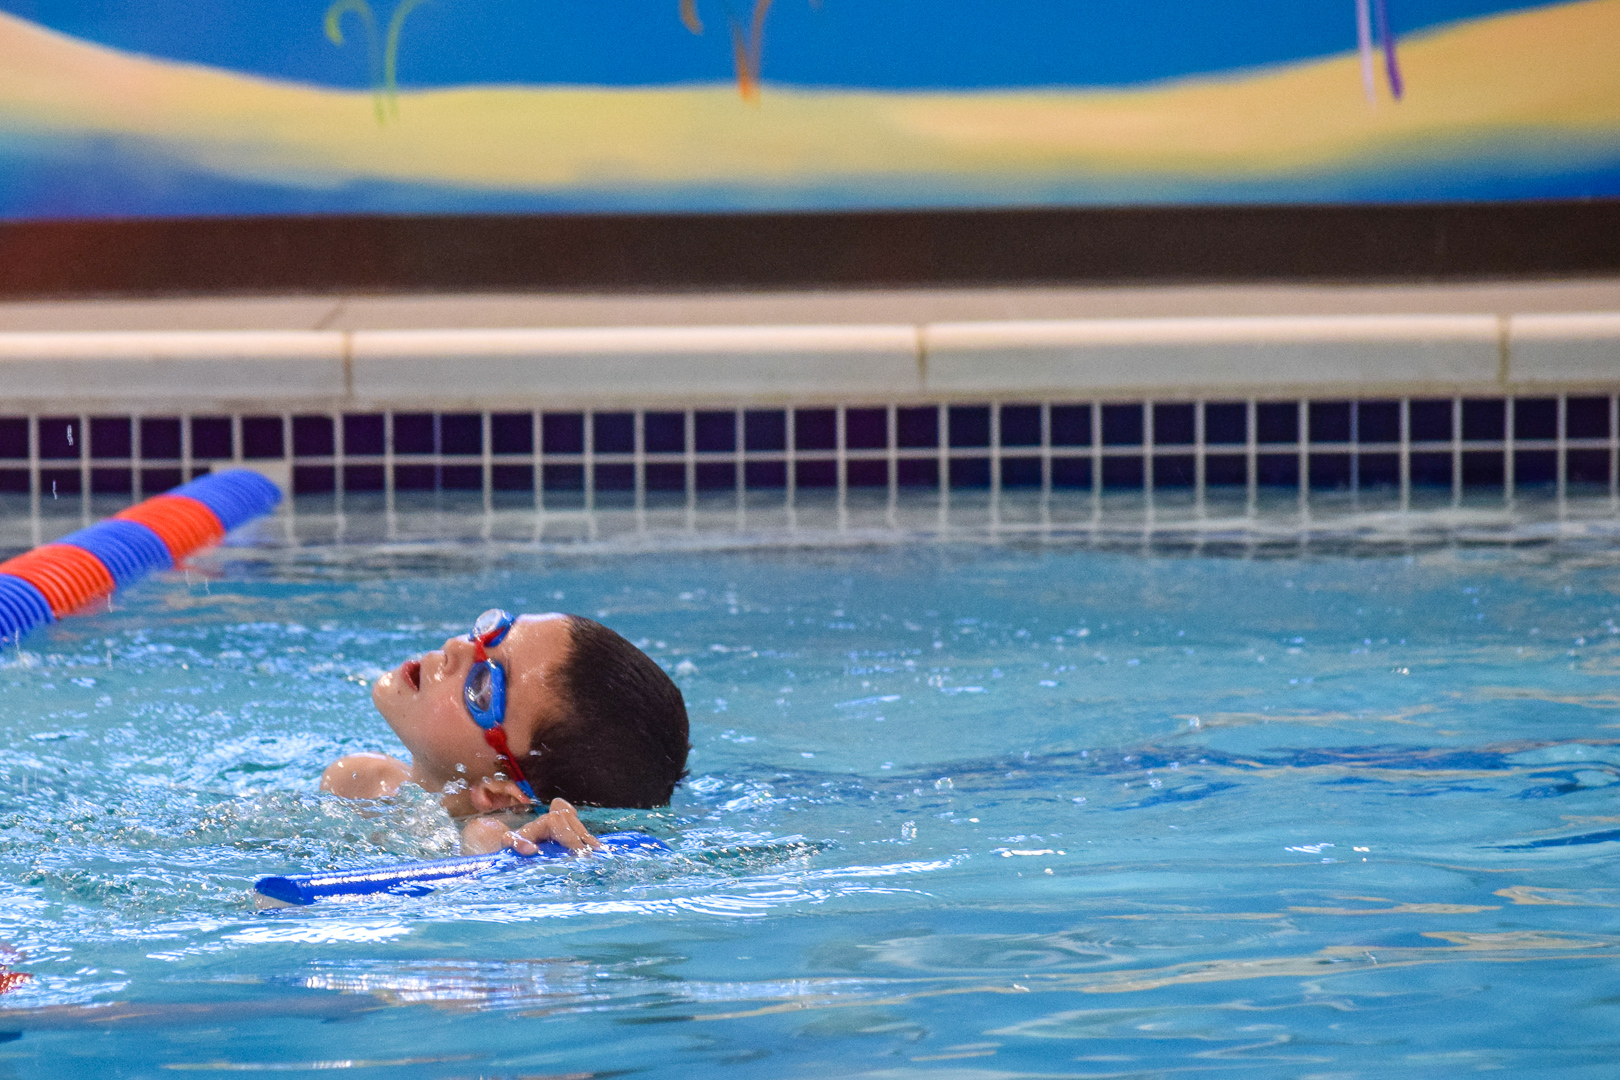 Learning Back Stroke at Goldfish Swim School - Not In Jersey